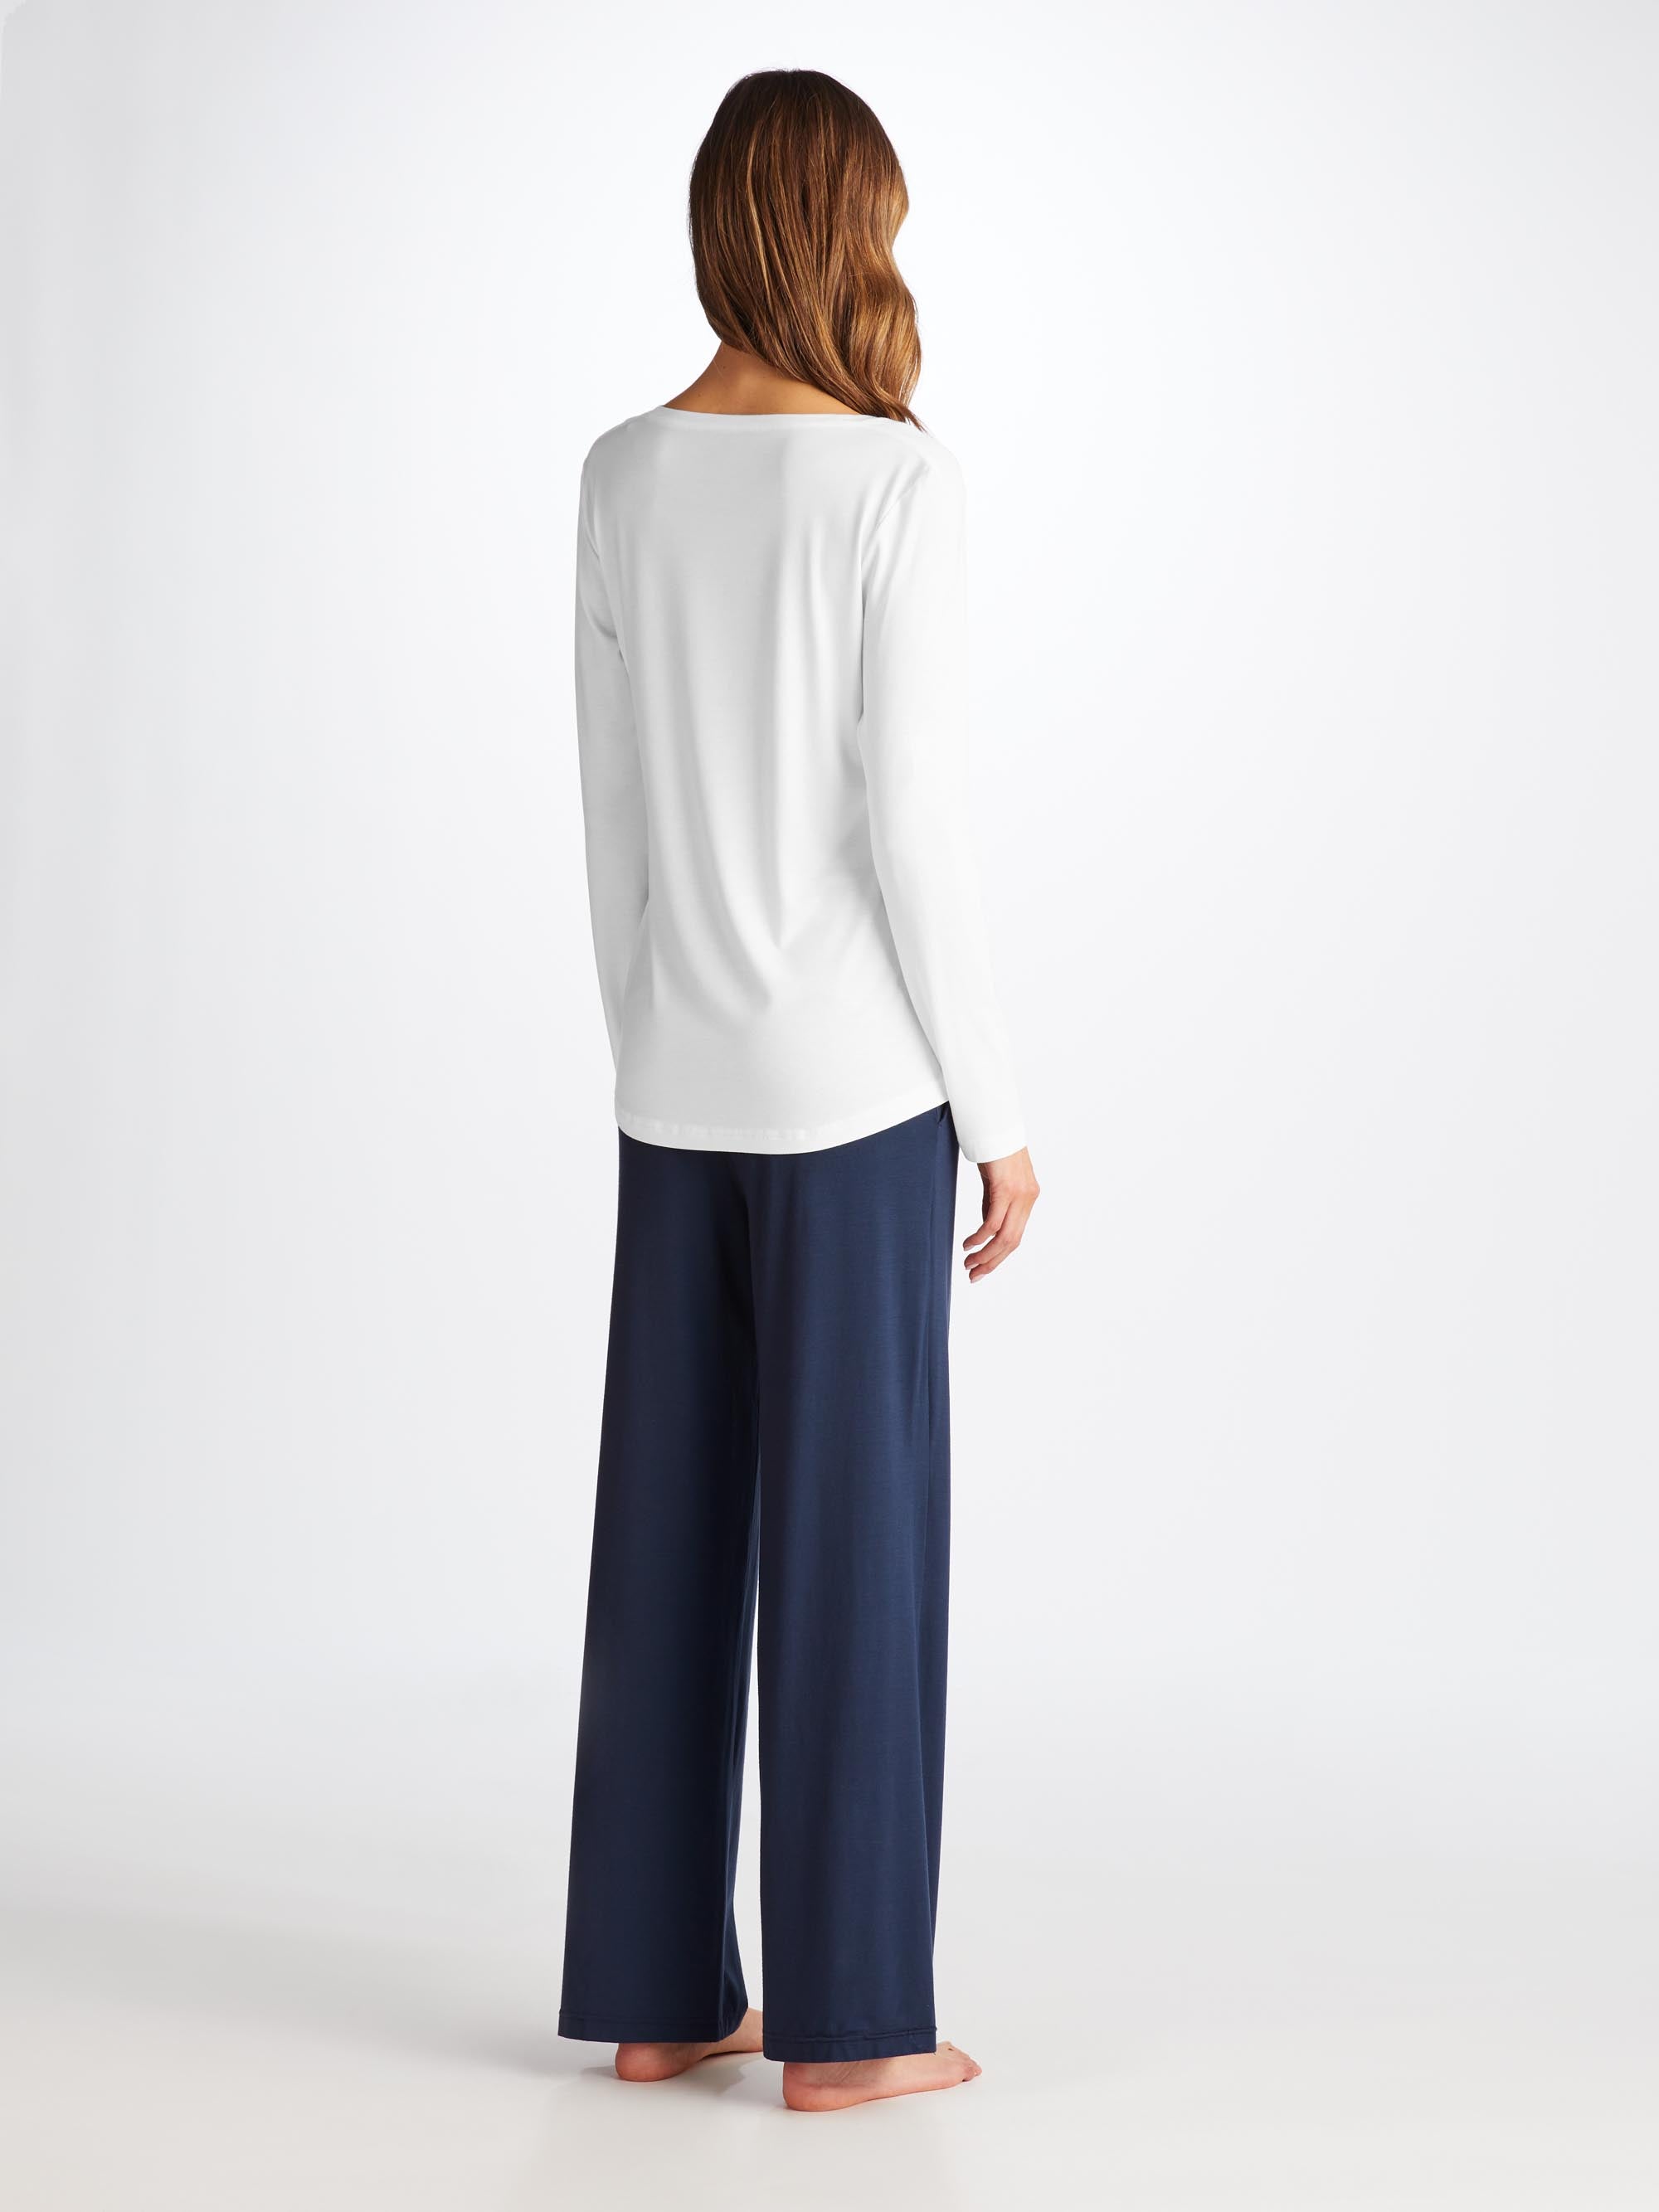 Women's Long Sleeve T-Shirt Lara Micro Modal Stretch White